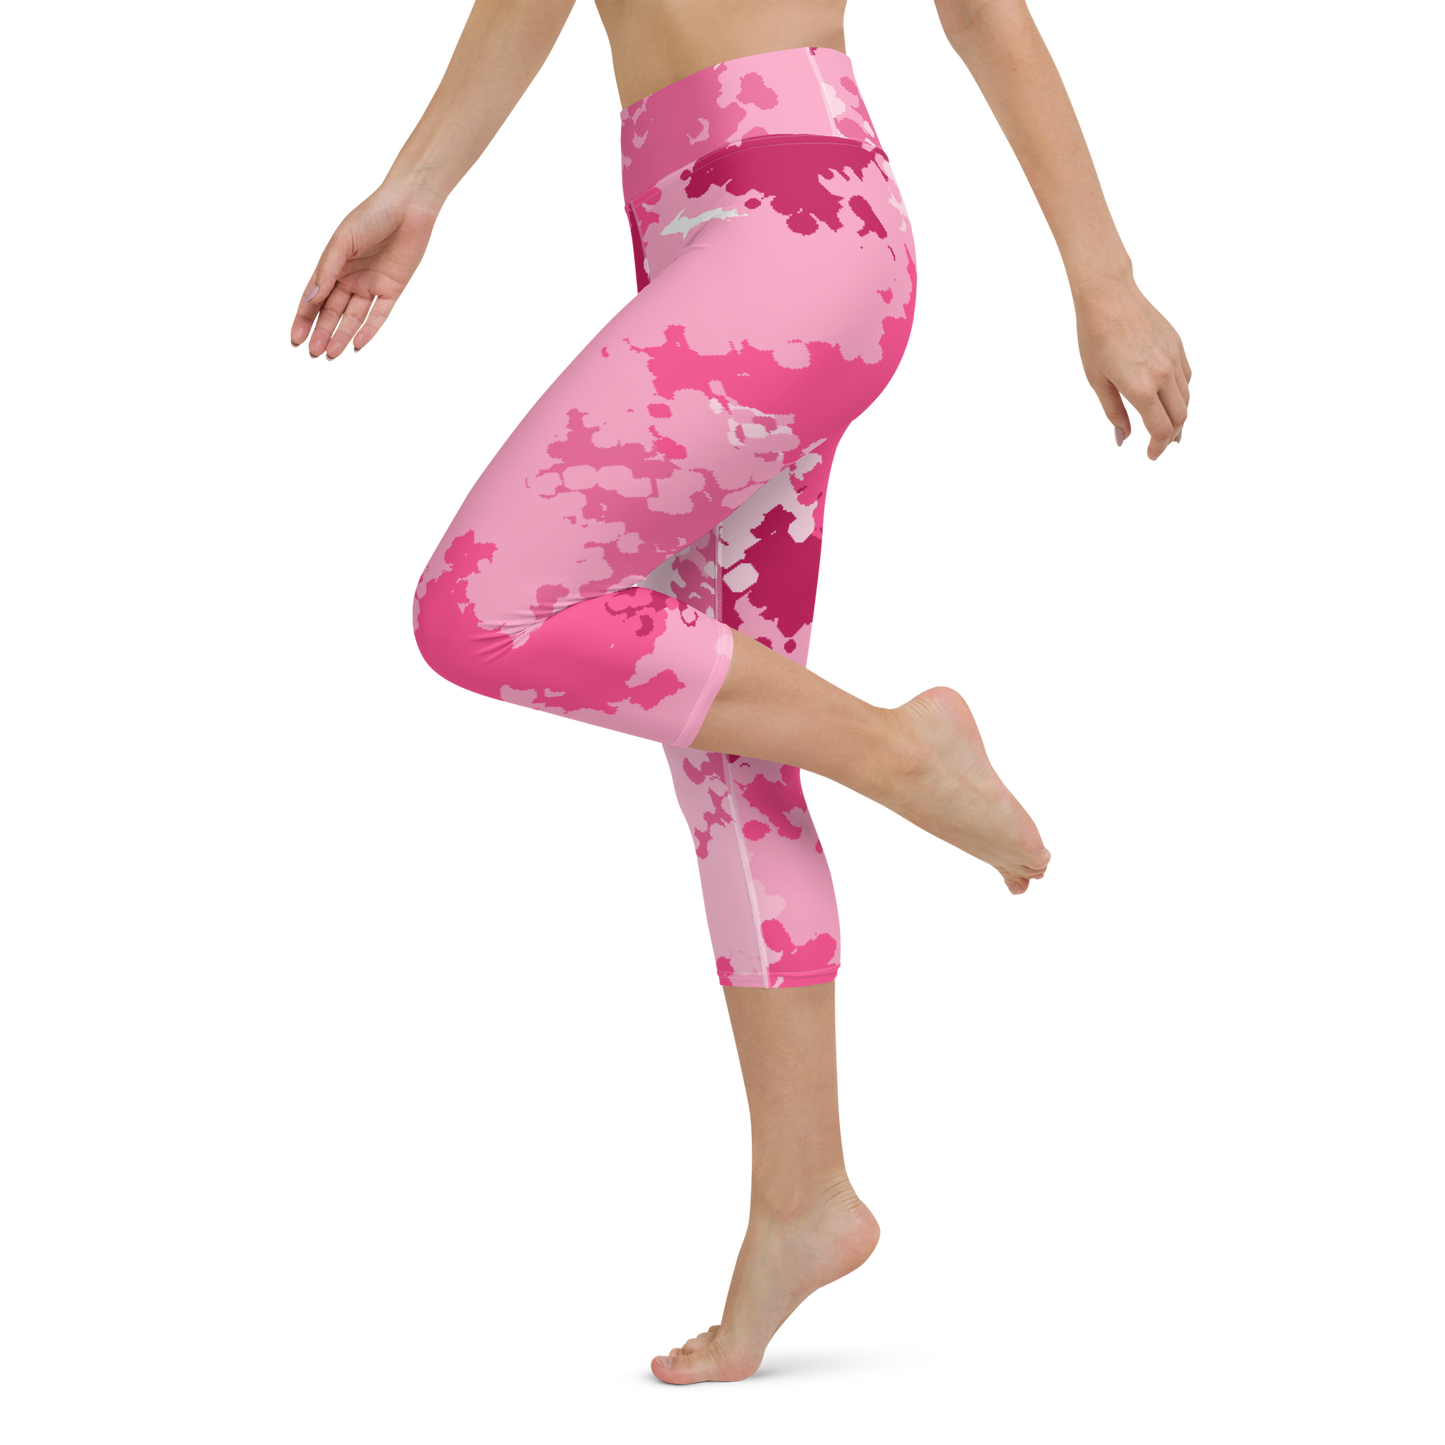 Michigan Upper Peninsula Yoga Capri Leggings (w/ UP Outline) | Pink Camo